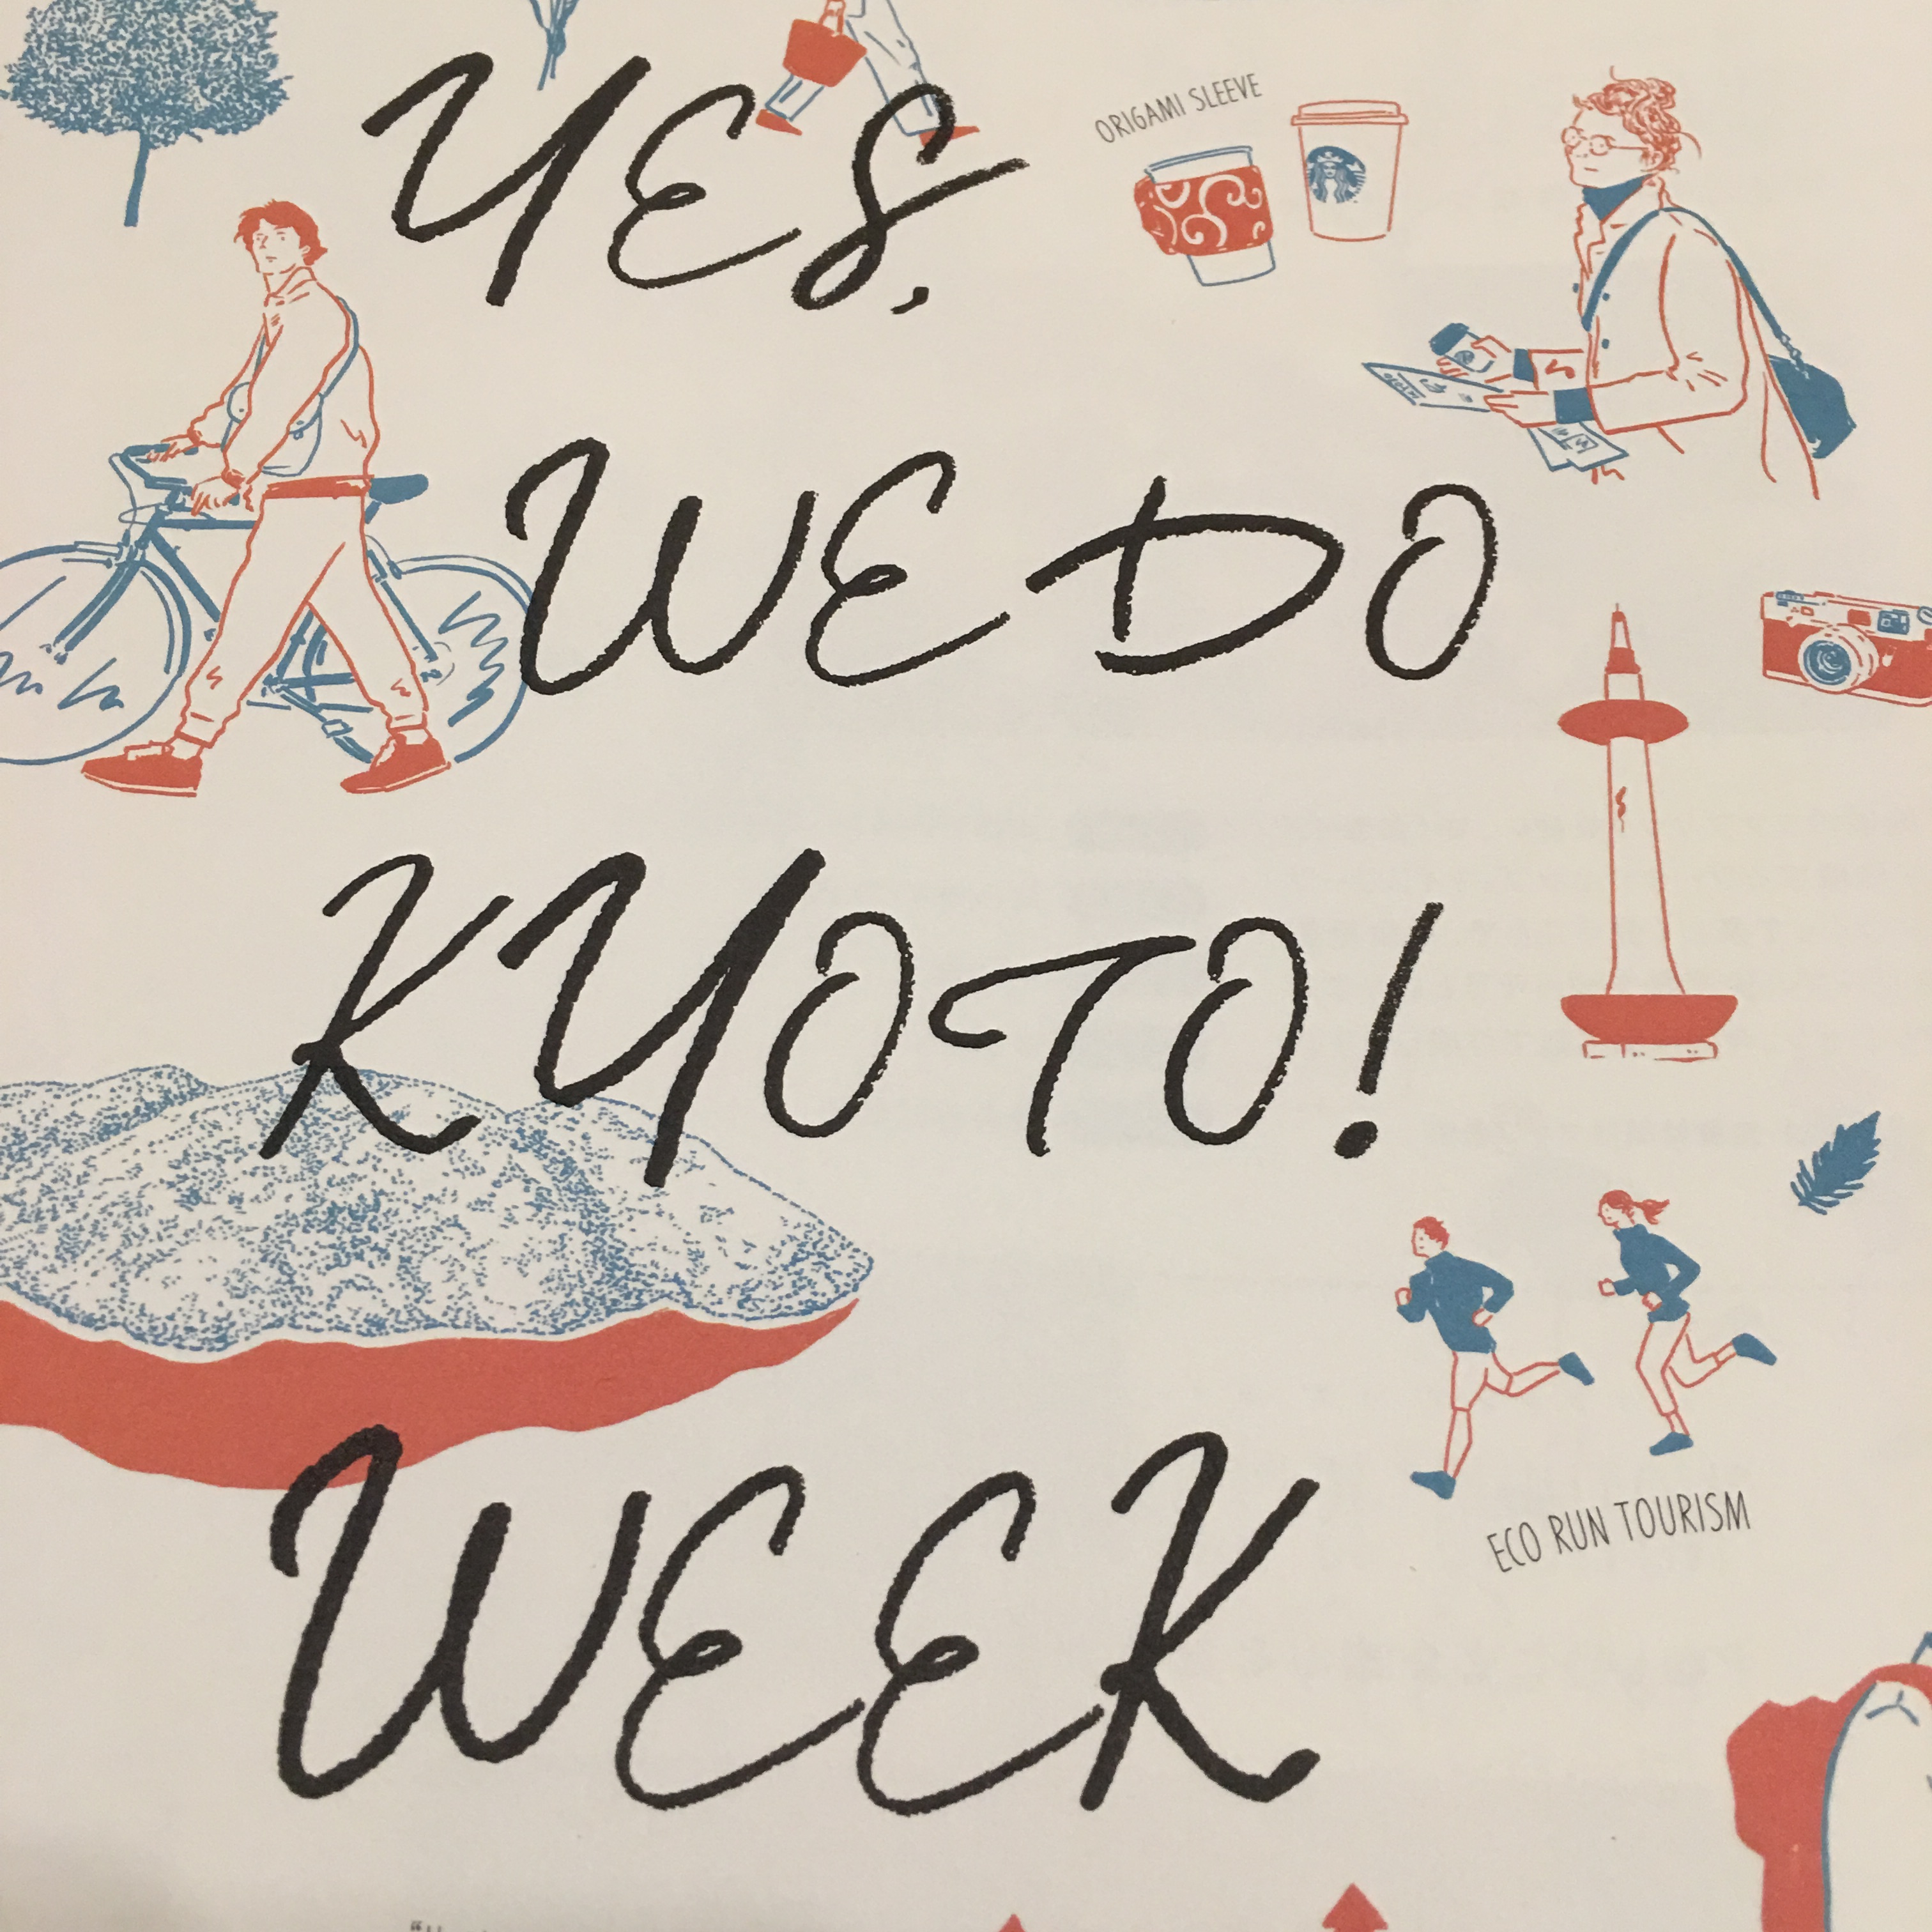 YES, DO WE KYOTO! WEEK